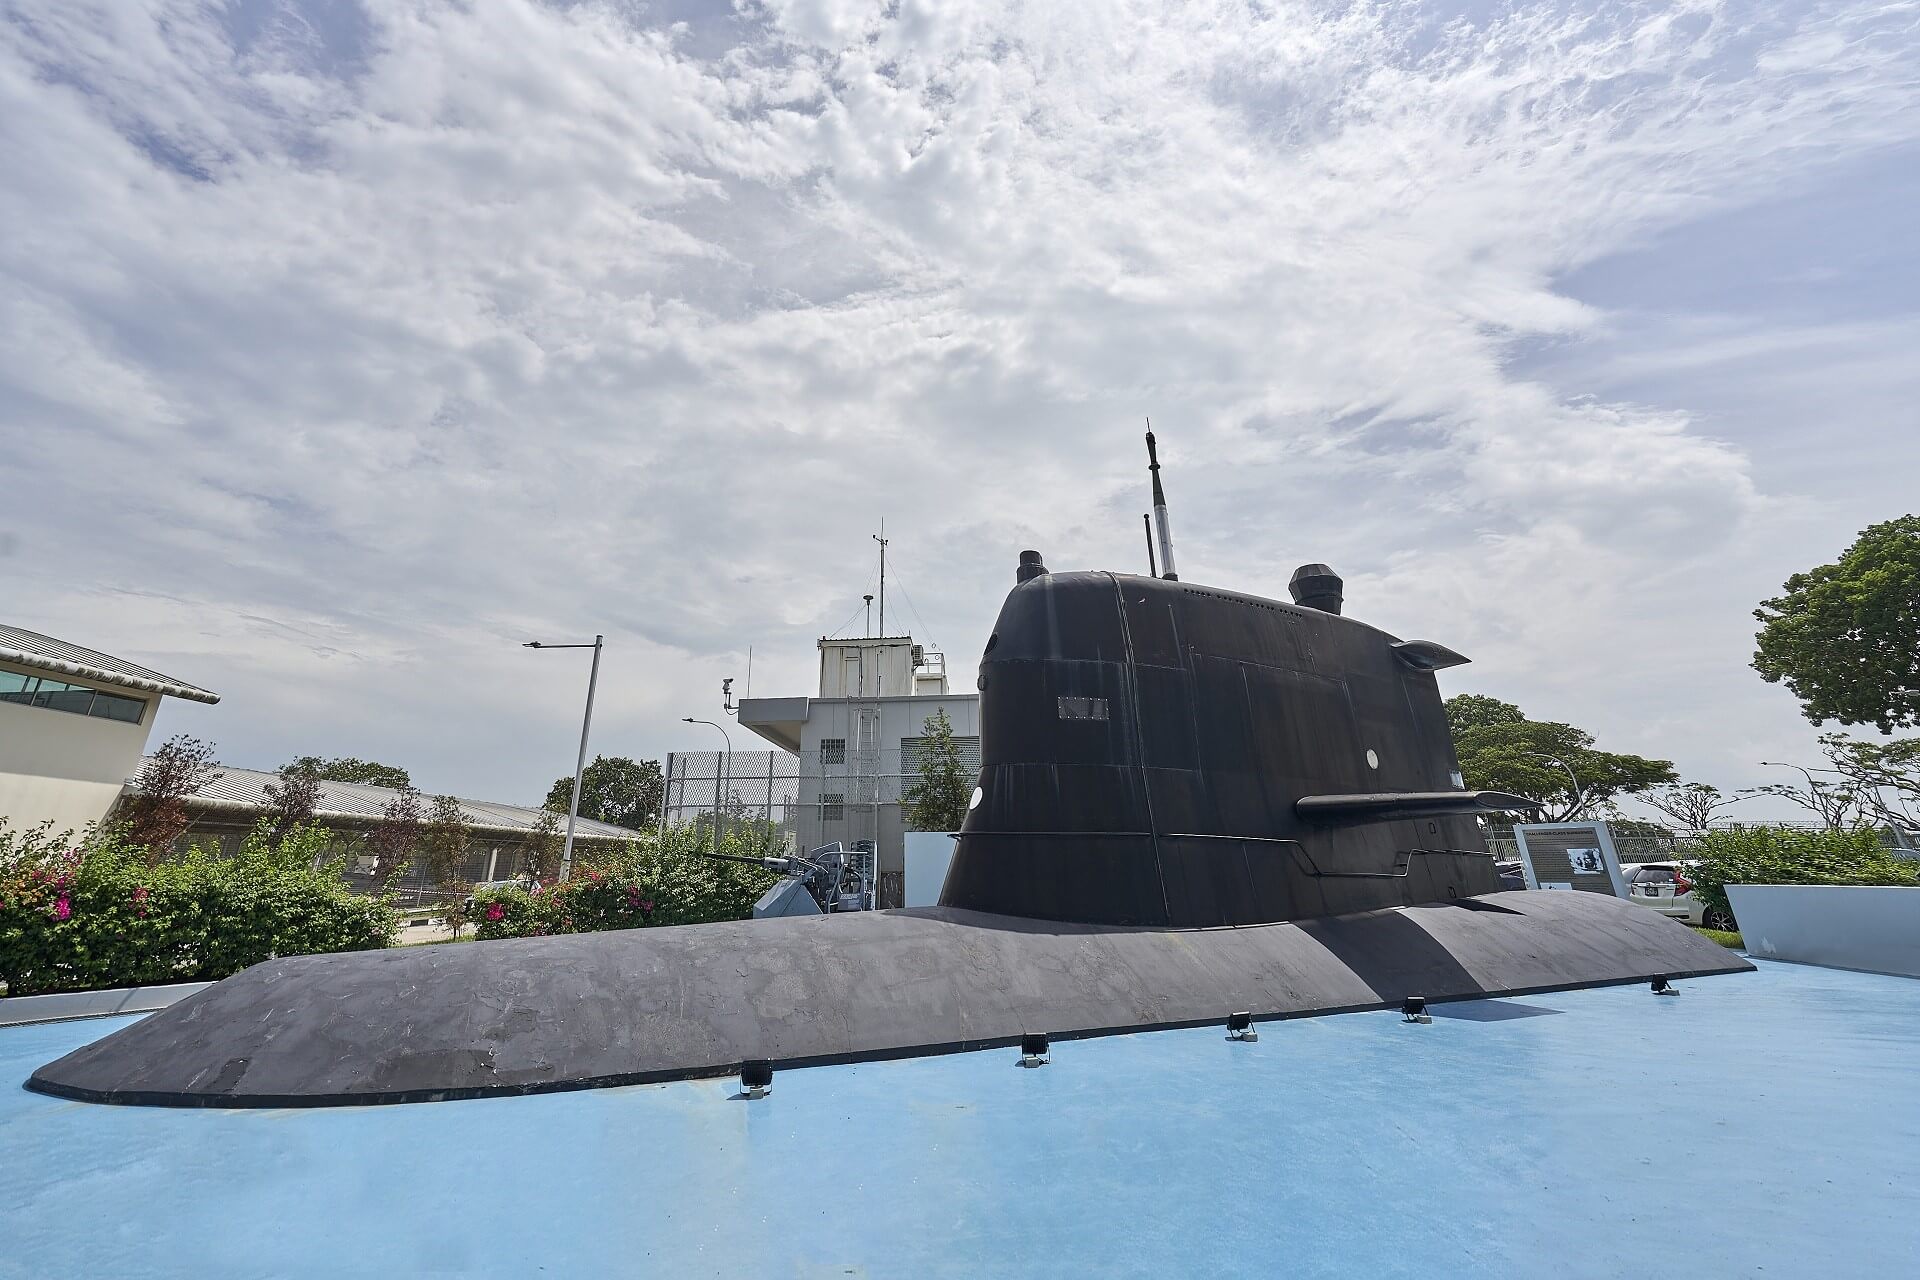 New submarine exhibit & more at revamped Navy museum